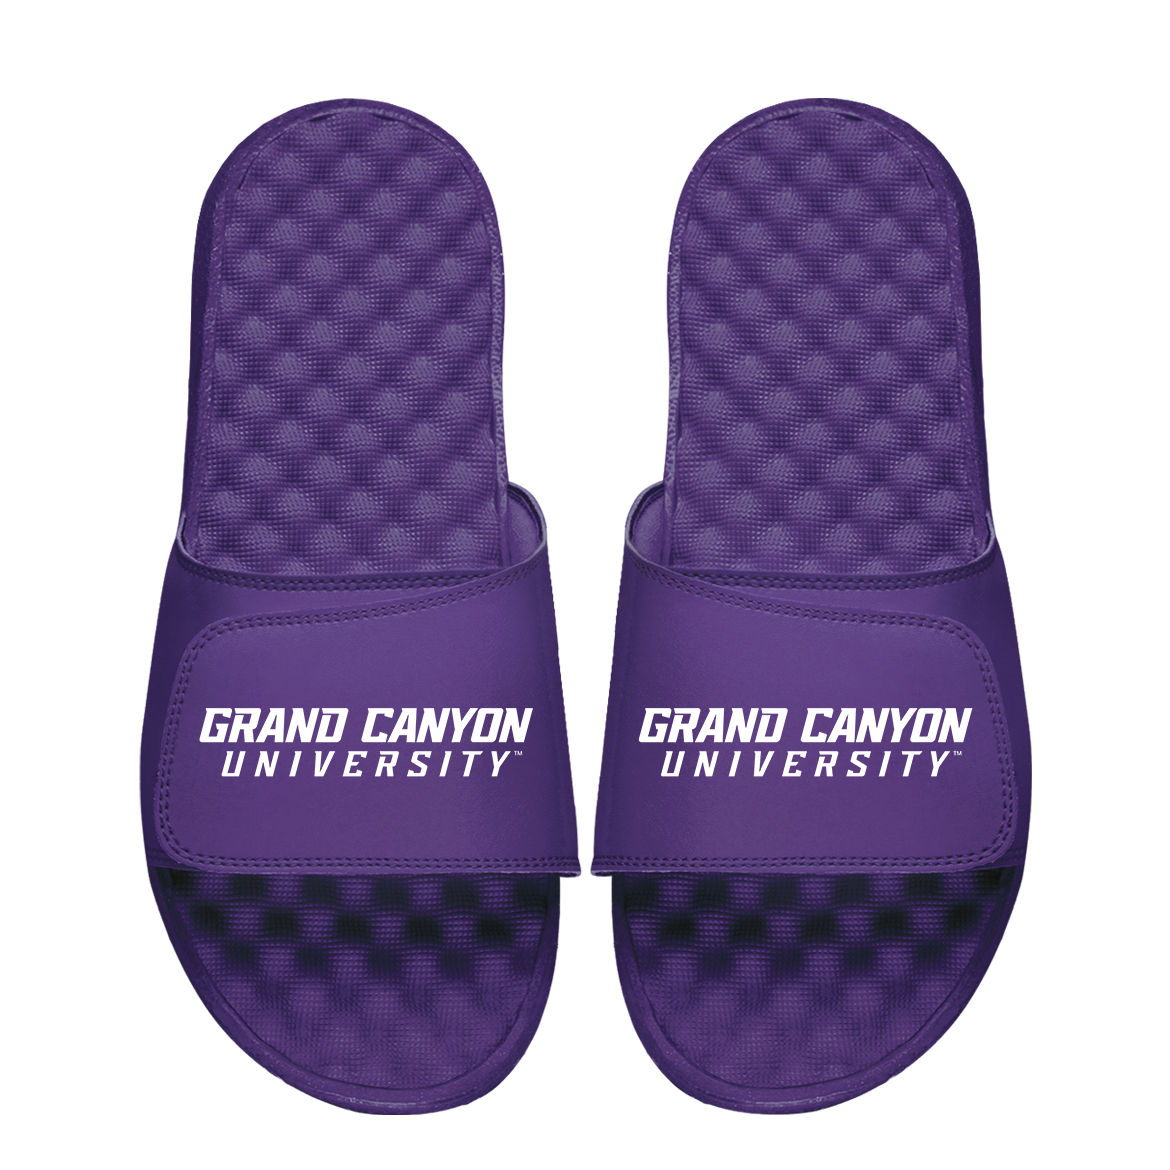 Grand Canyon University Wordmark